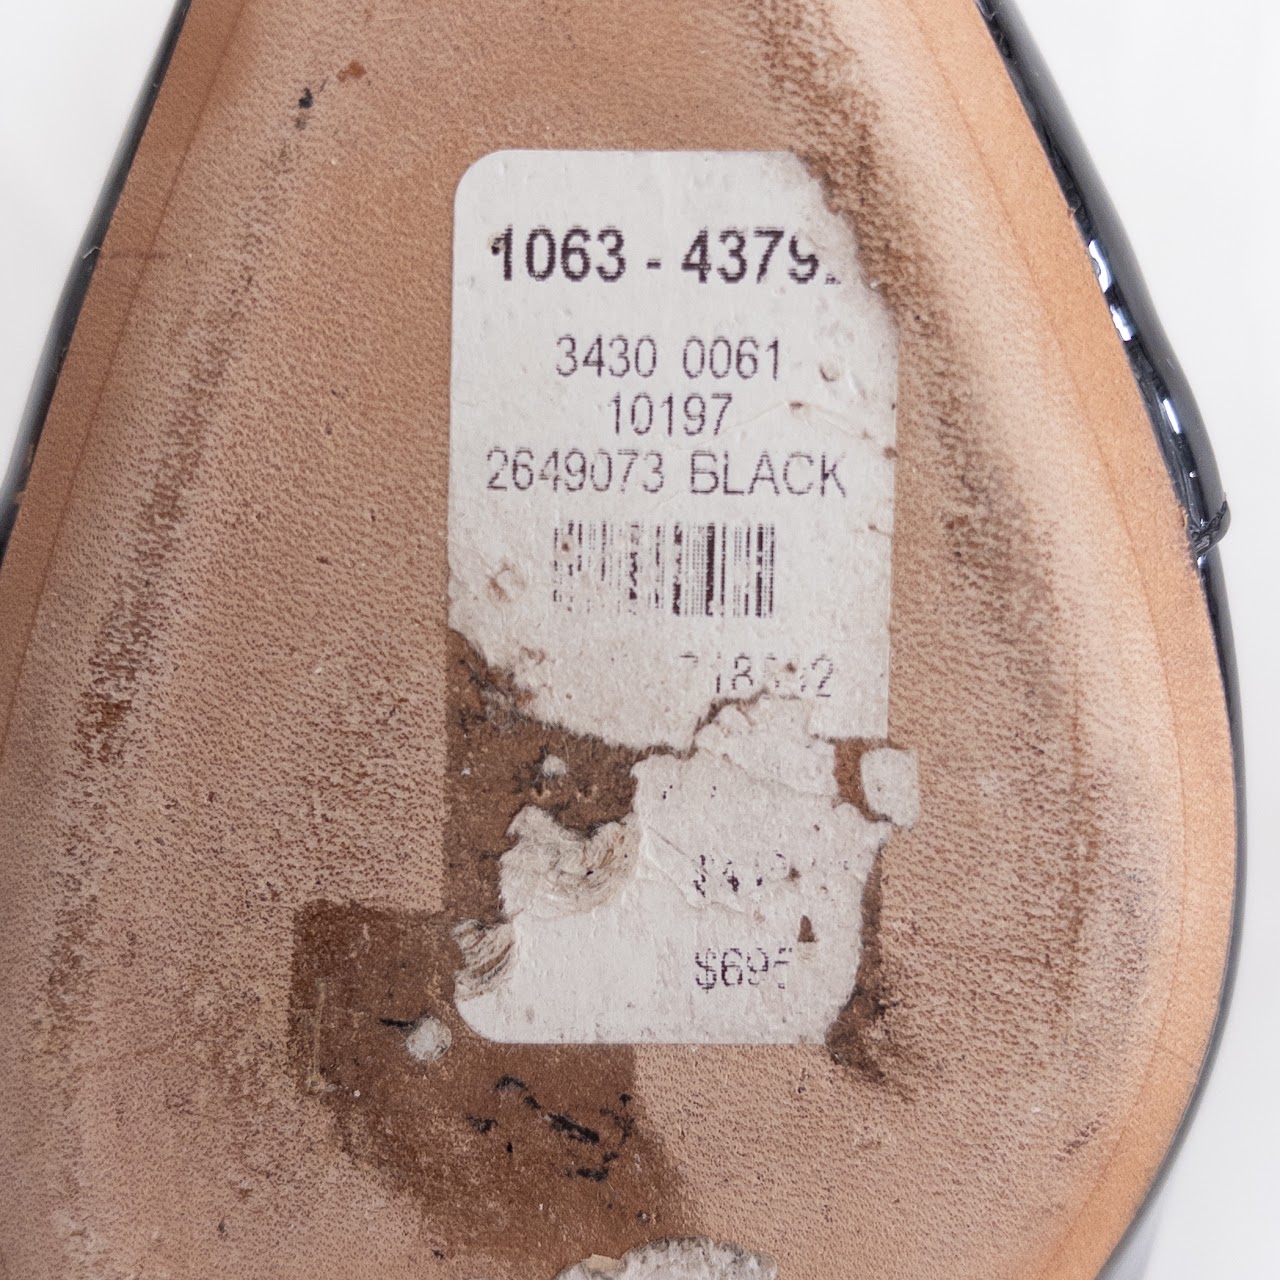 Alexandre Birman Kittie Patent Leather Ankle Boots